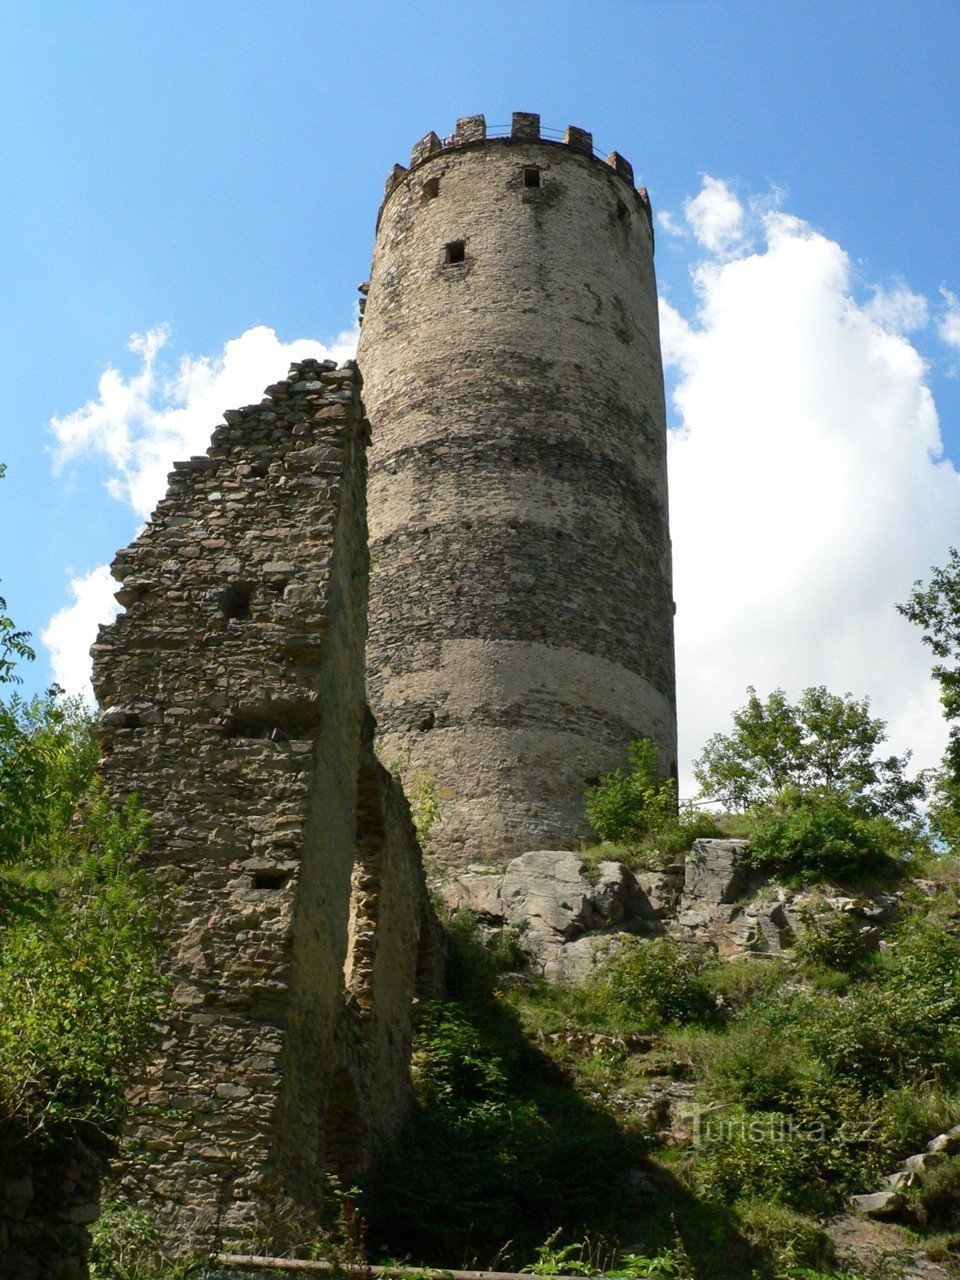 The ruins of the Šelmbrek castle